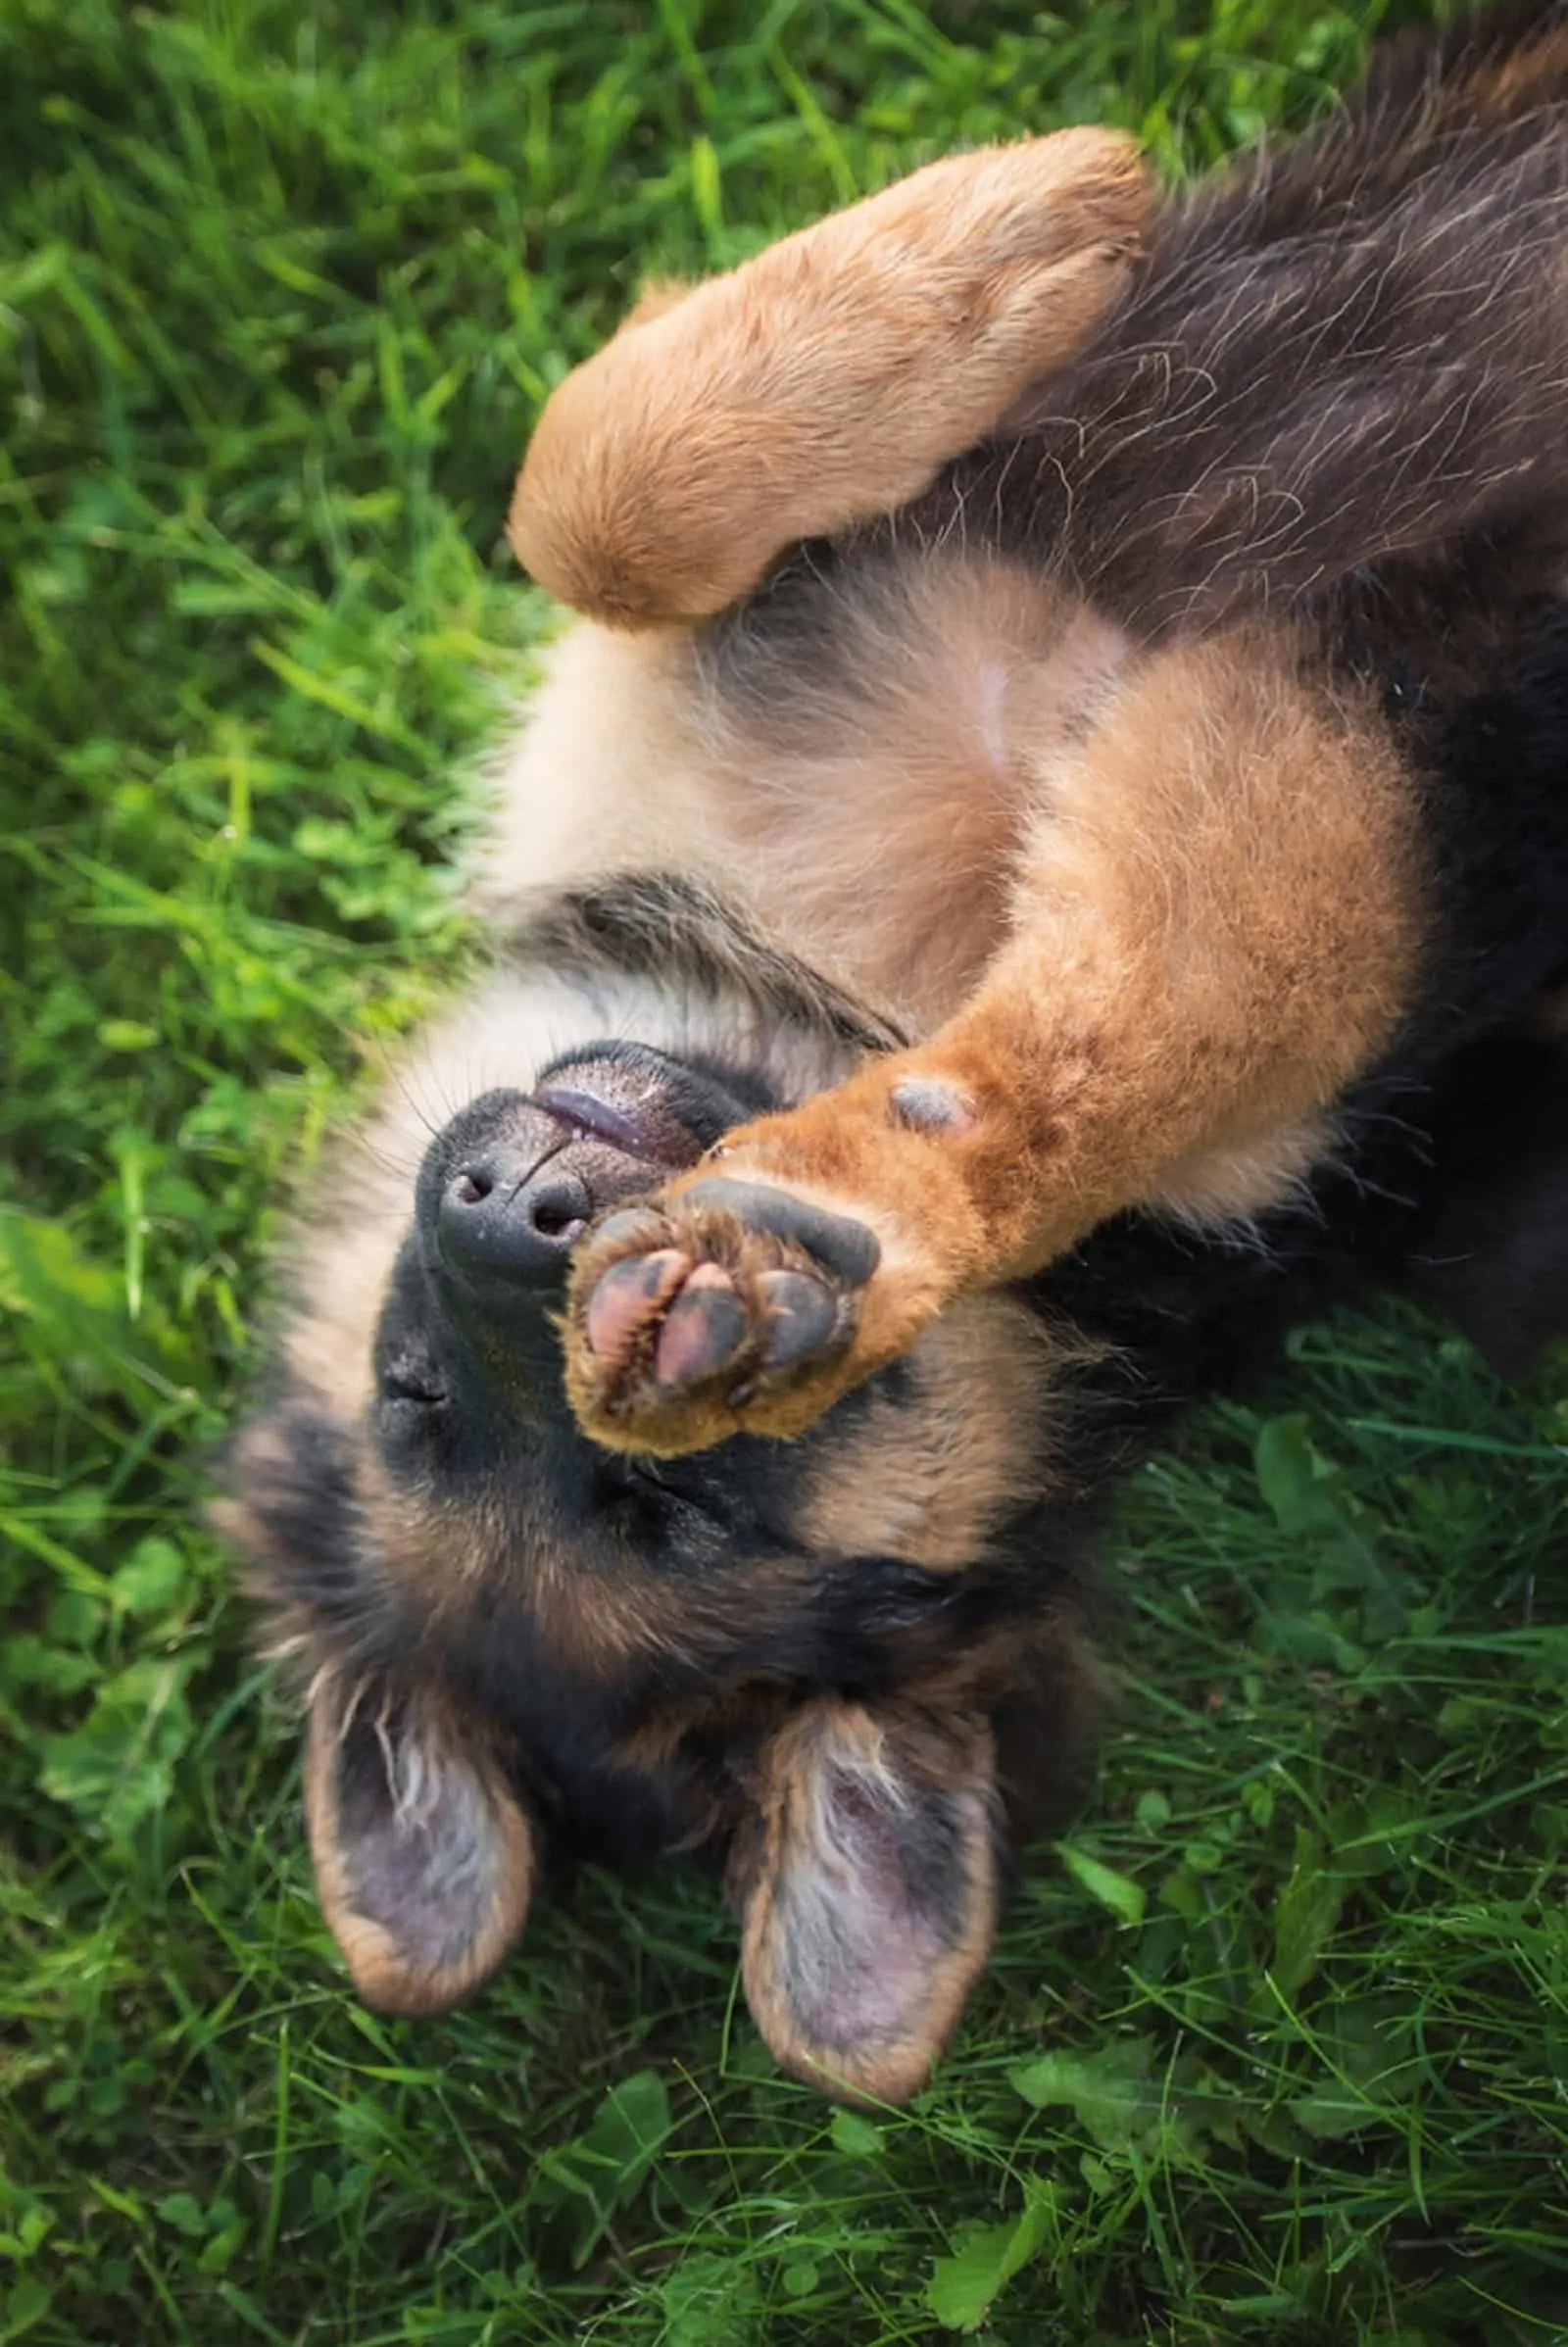  german shepherd puppy lying on the grass